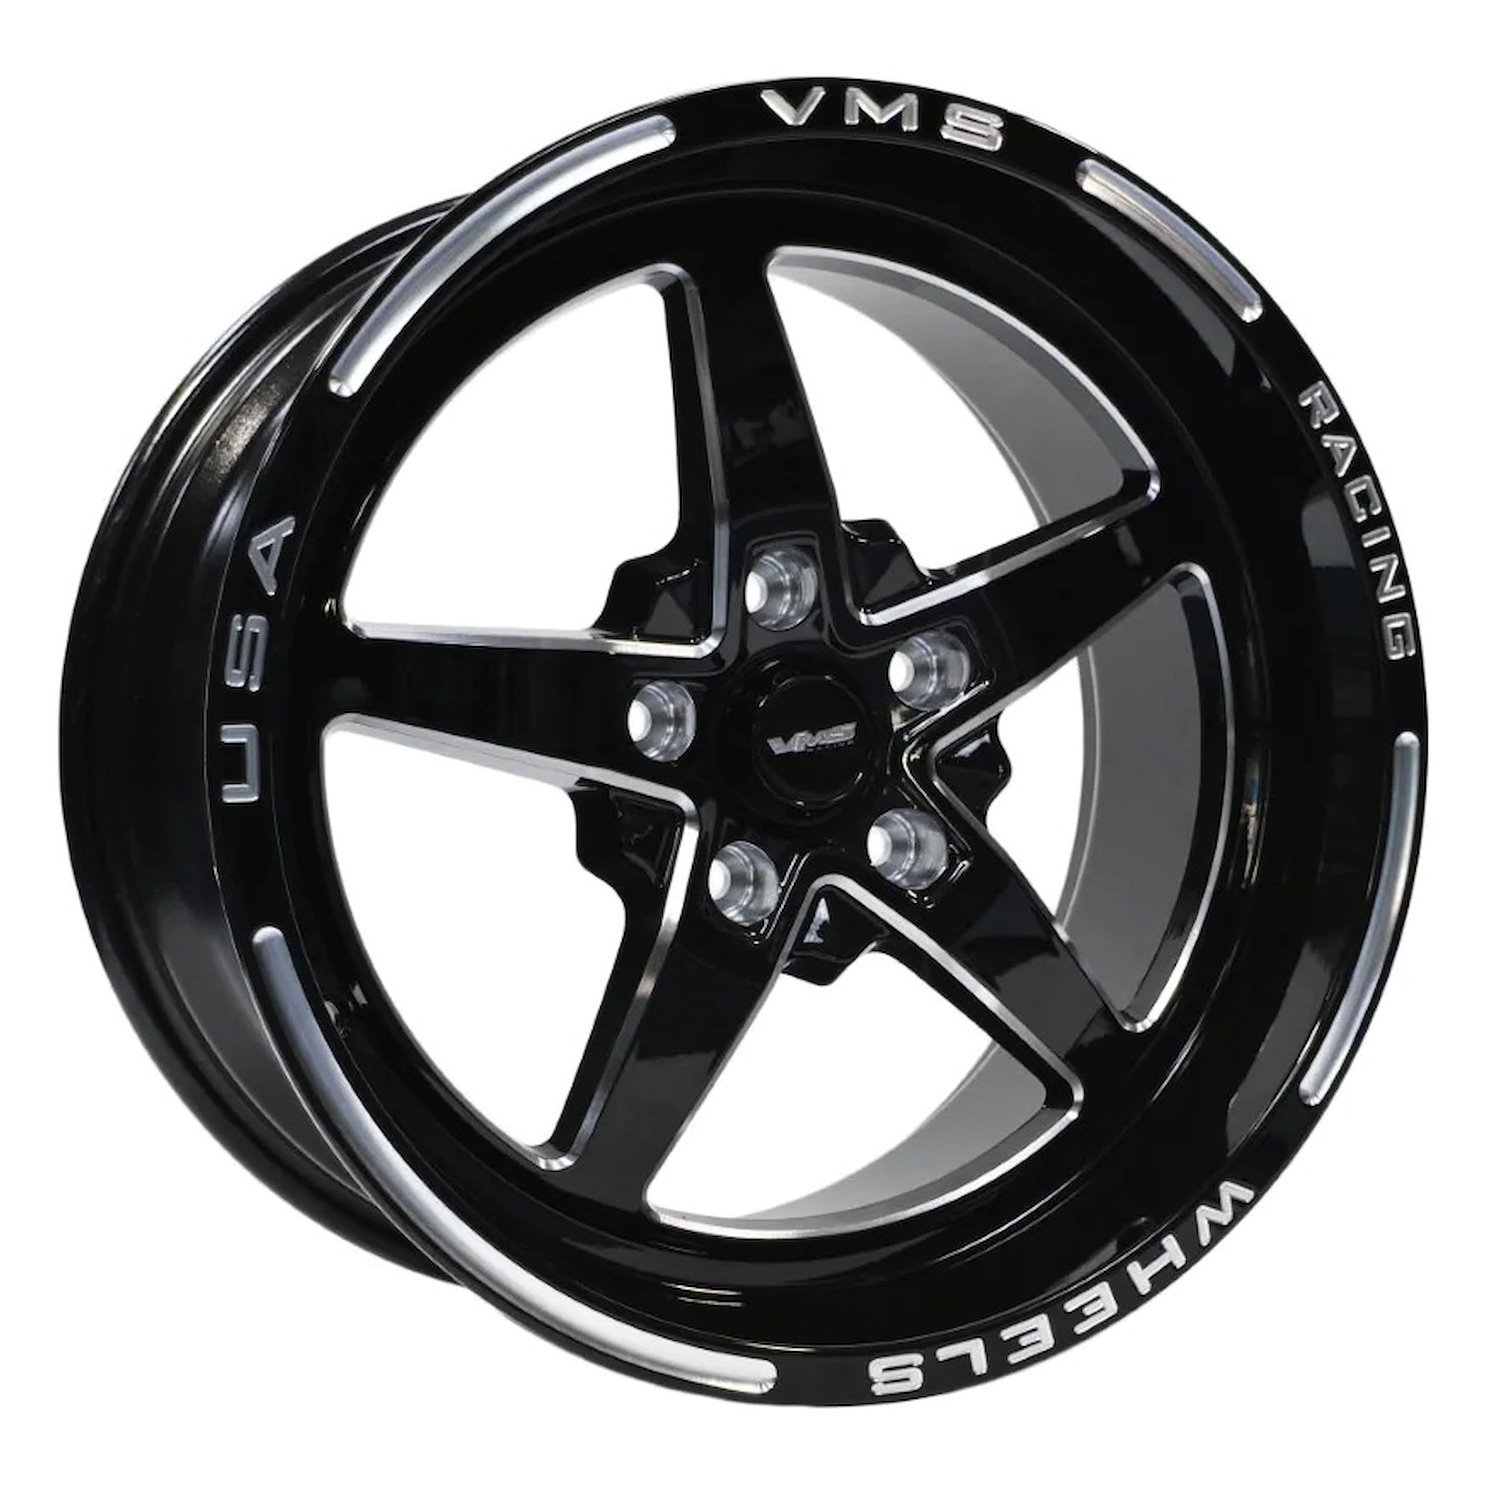 VWST008 V-Star Wheel, Size: 17" x 8", Bolt Pattern: 5 x 100 mm [Finish: Gloss Black Milled]